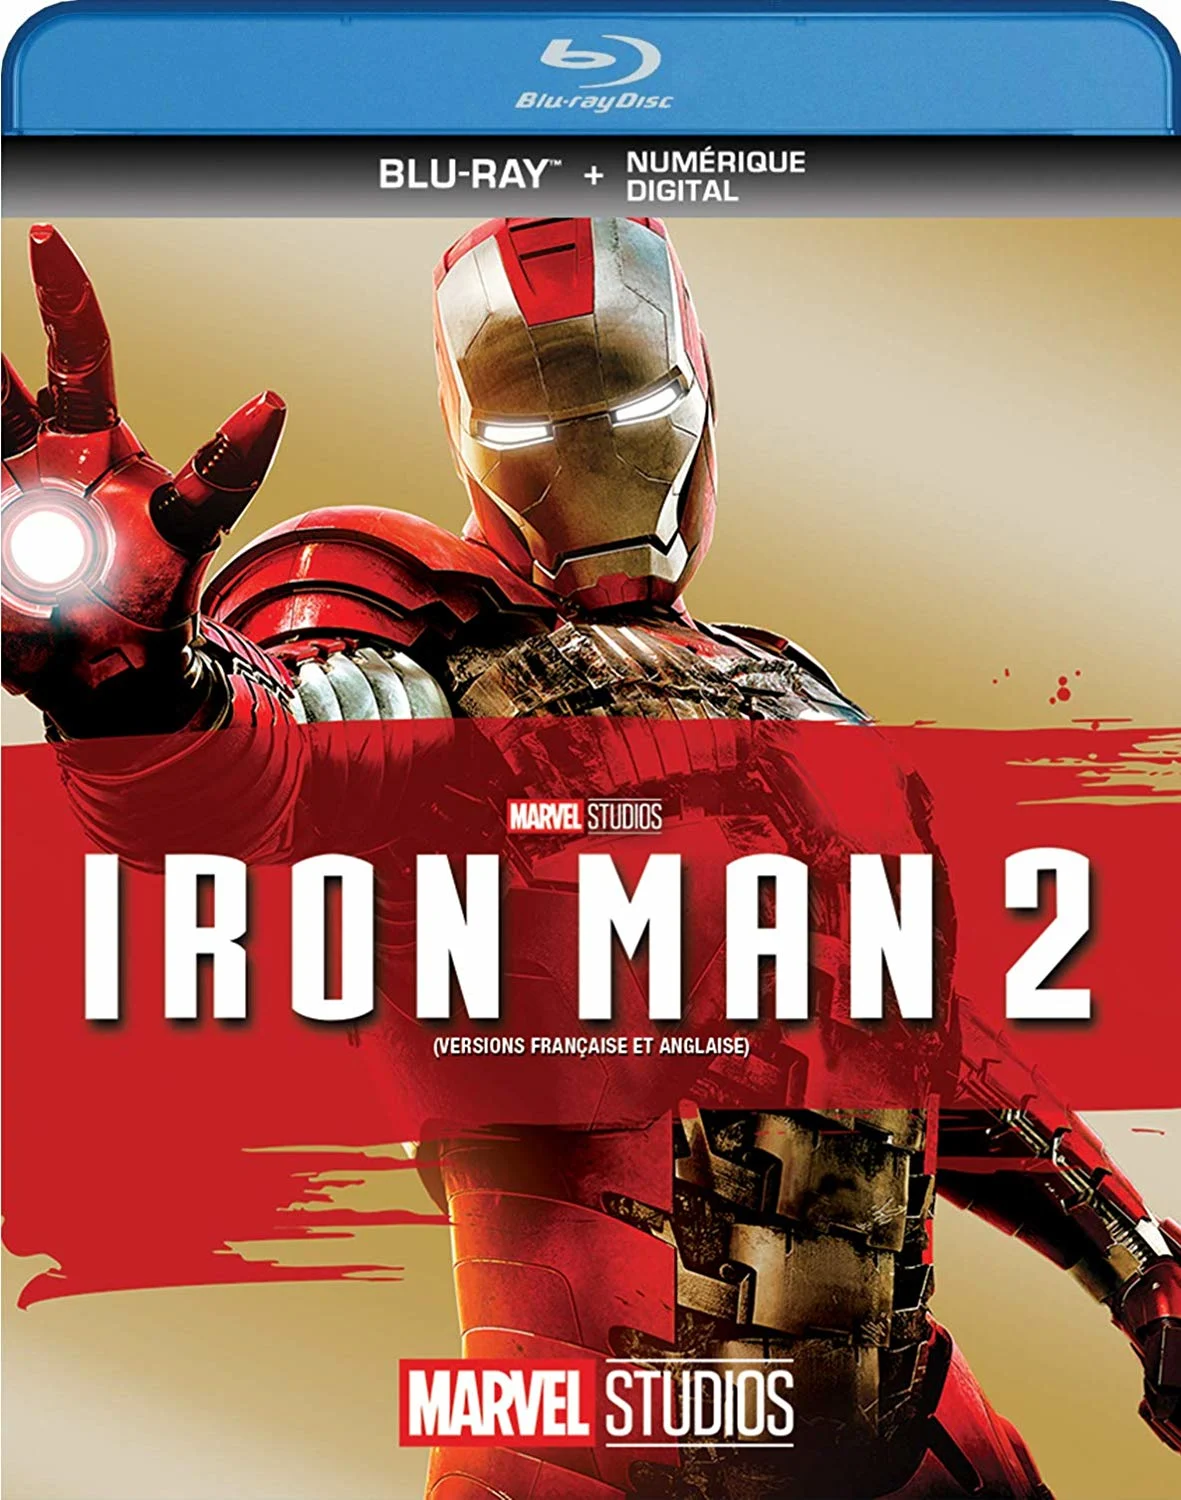 Iron Man 2 (Blu-ray) on MovieShack